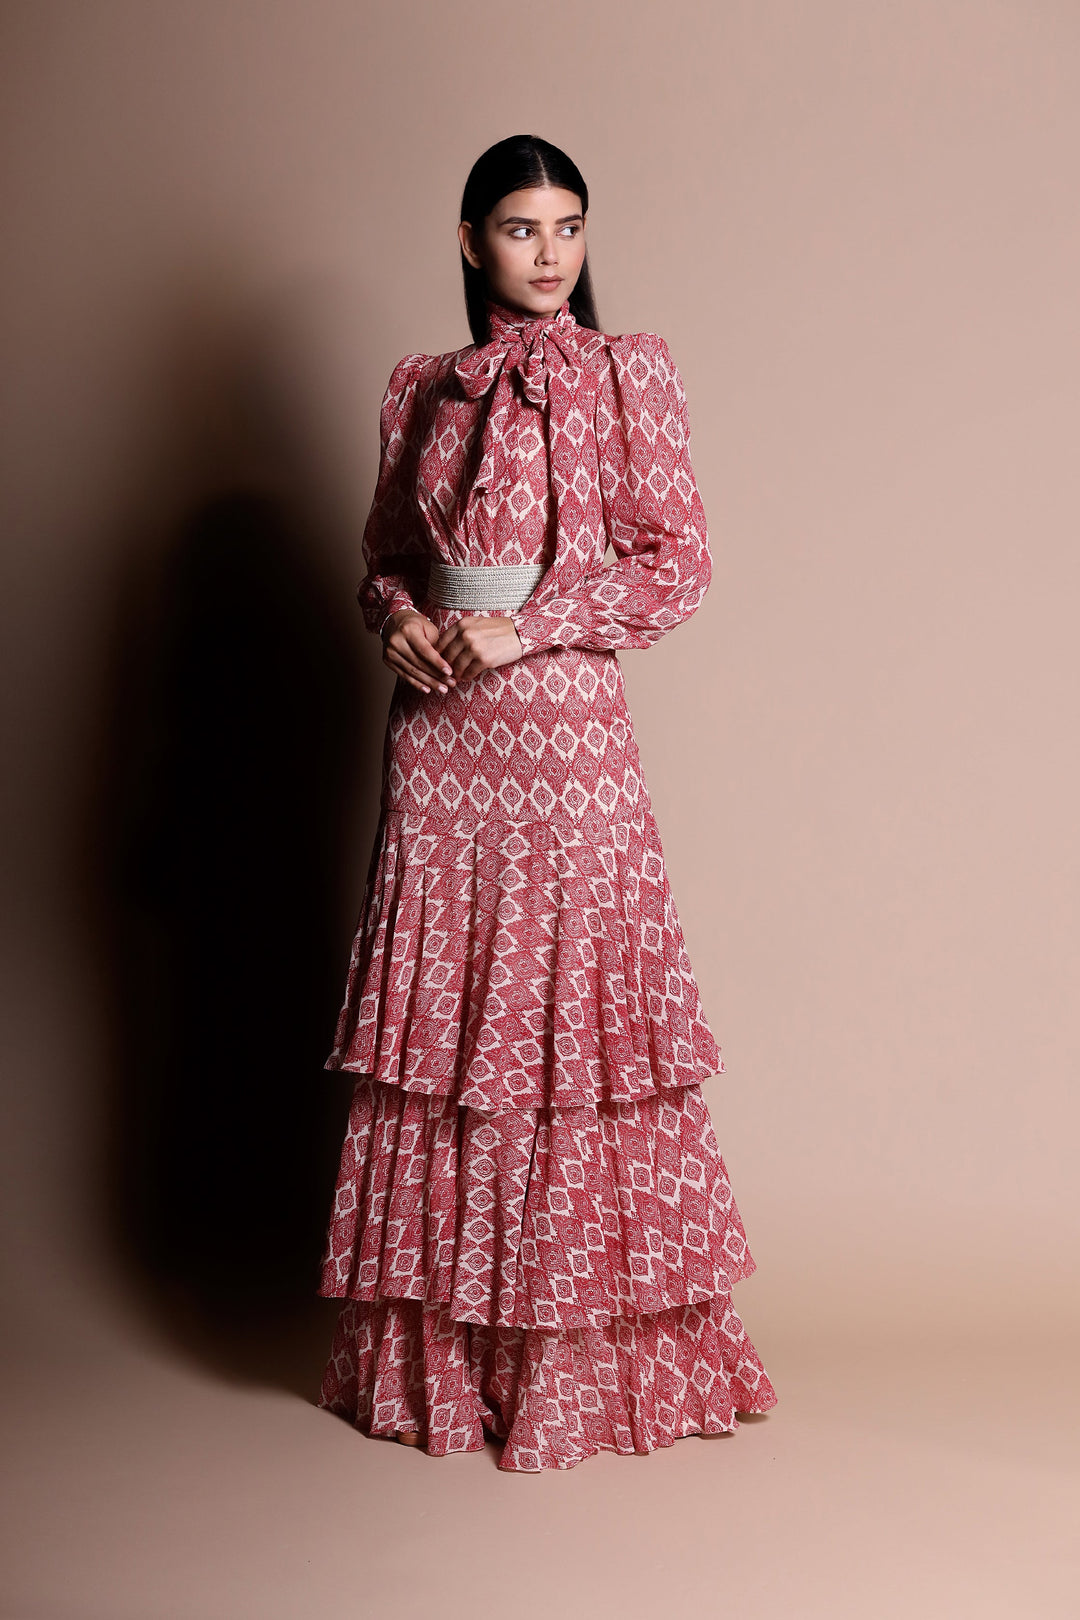 A Printed Layered Dress With A Pearl Embellished Belt - BHUMIKA SHARMA